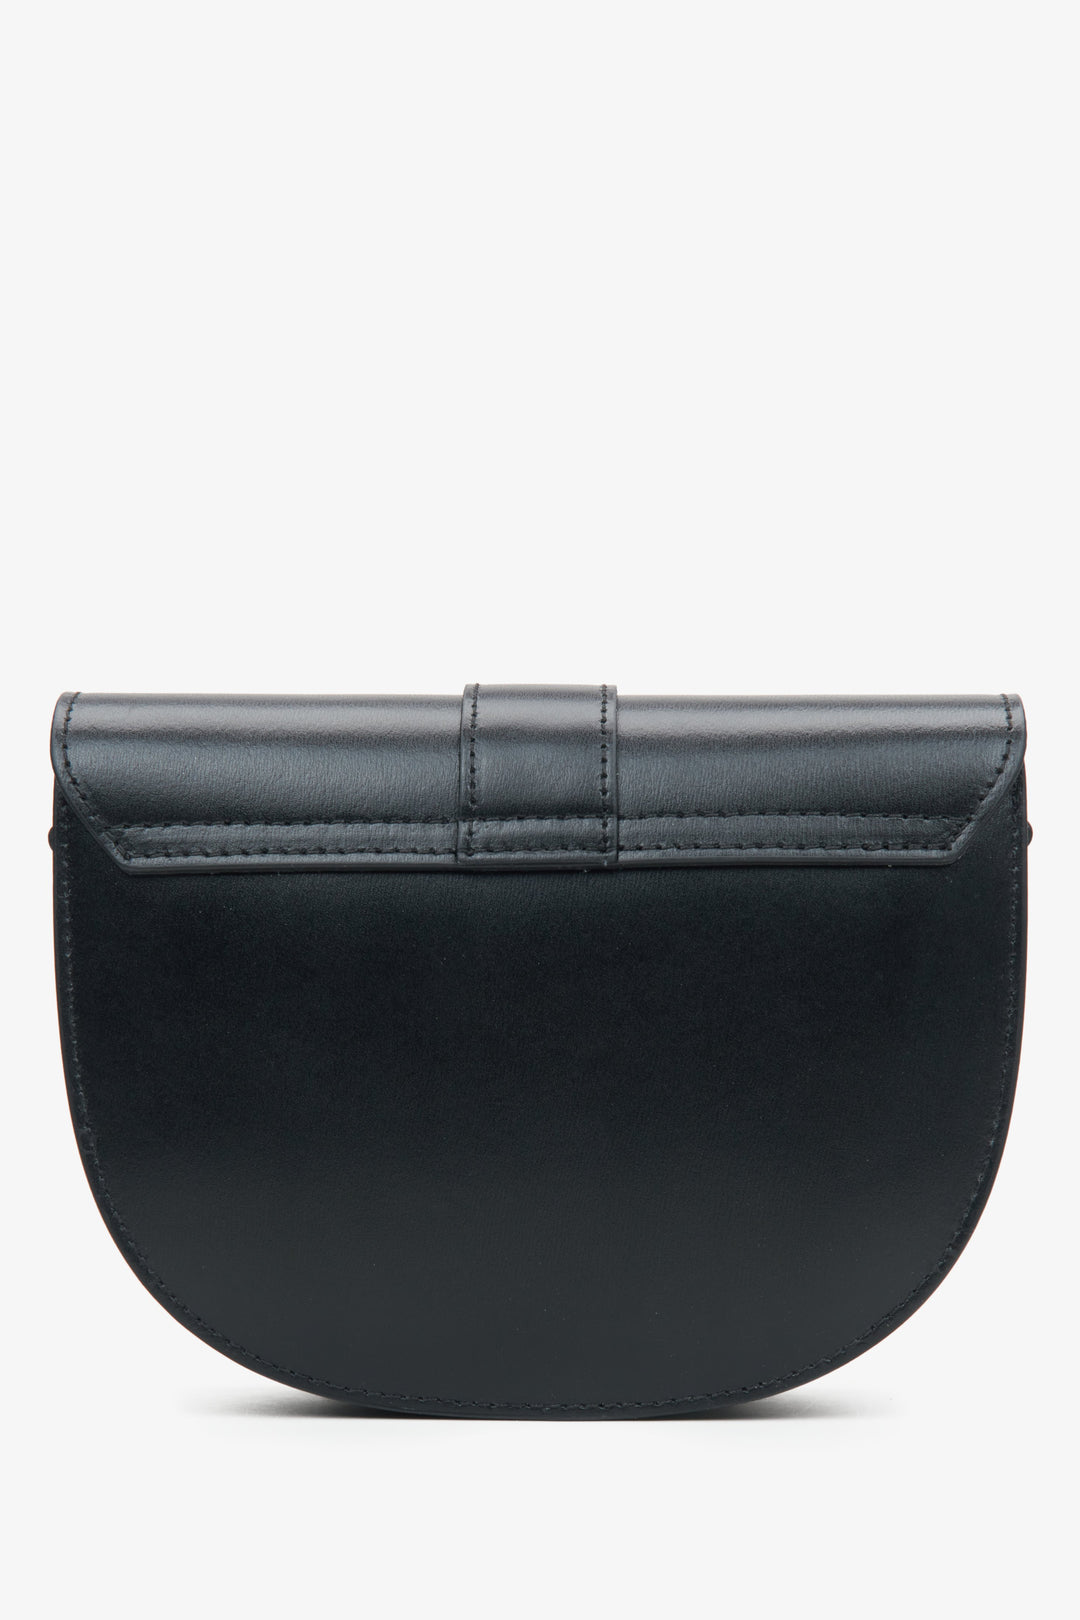 Estro women's black crescent-shaped  handbag made of genuine leather - back view presentation of the model.